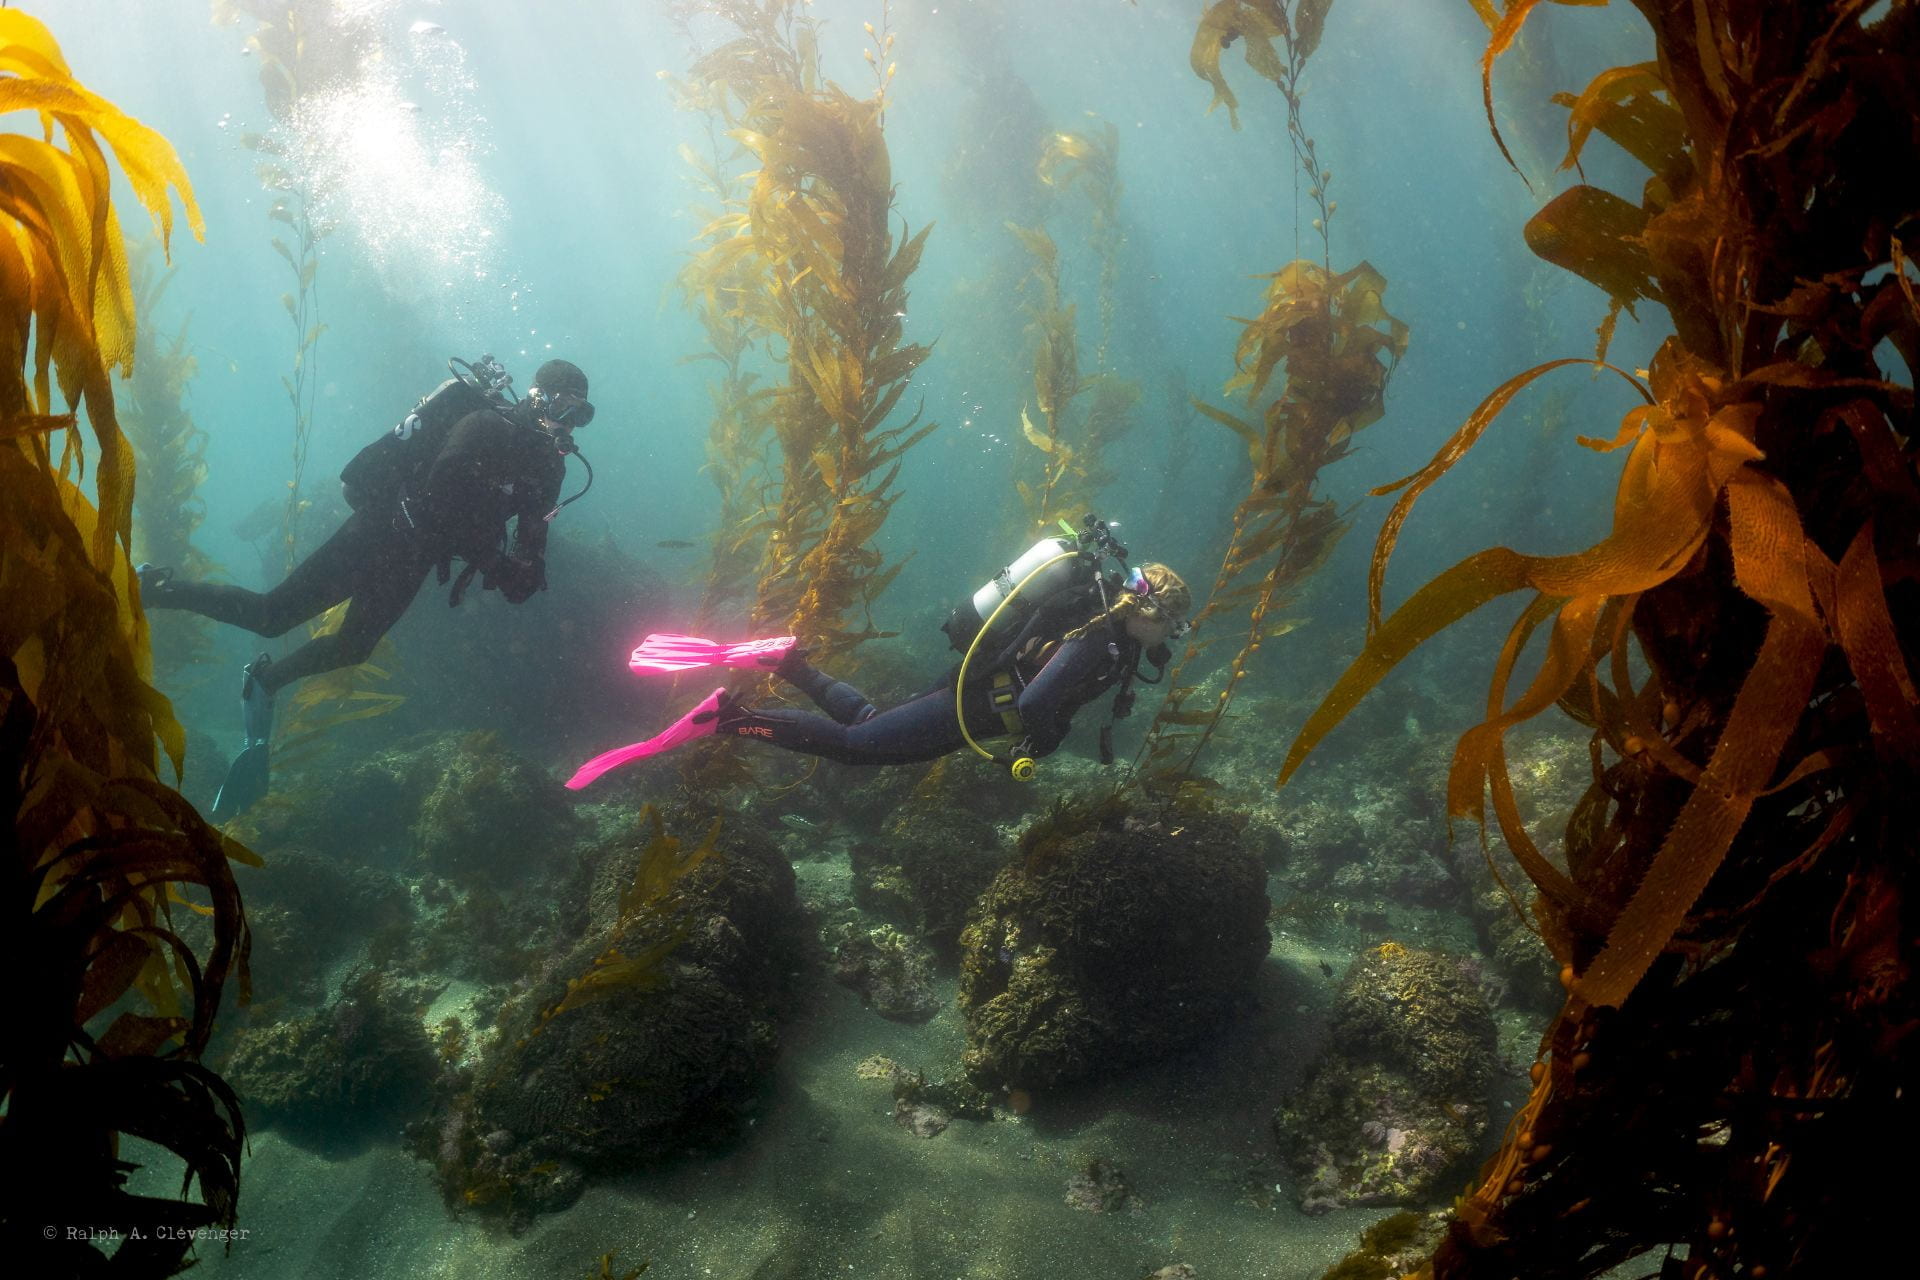 Two divers in full scuba gear swim in blue green waters surrounded by giant kelp. 